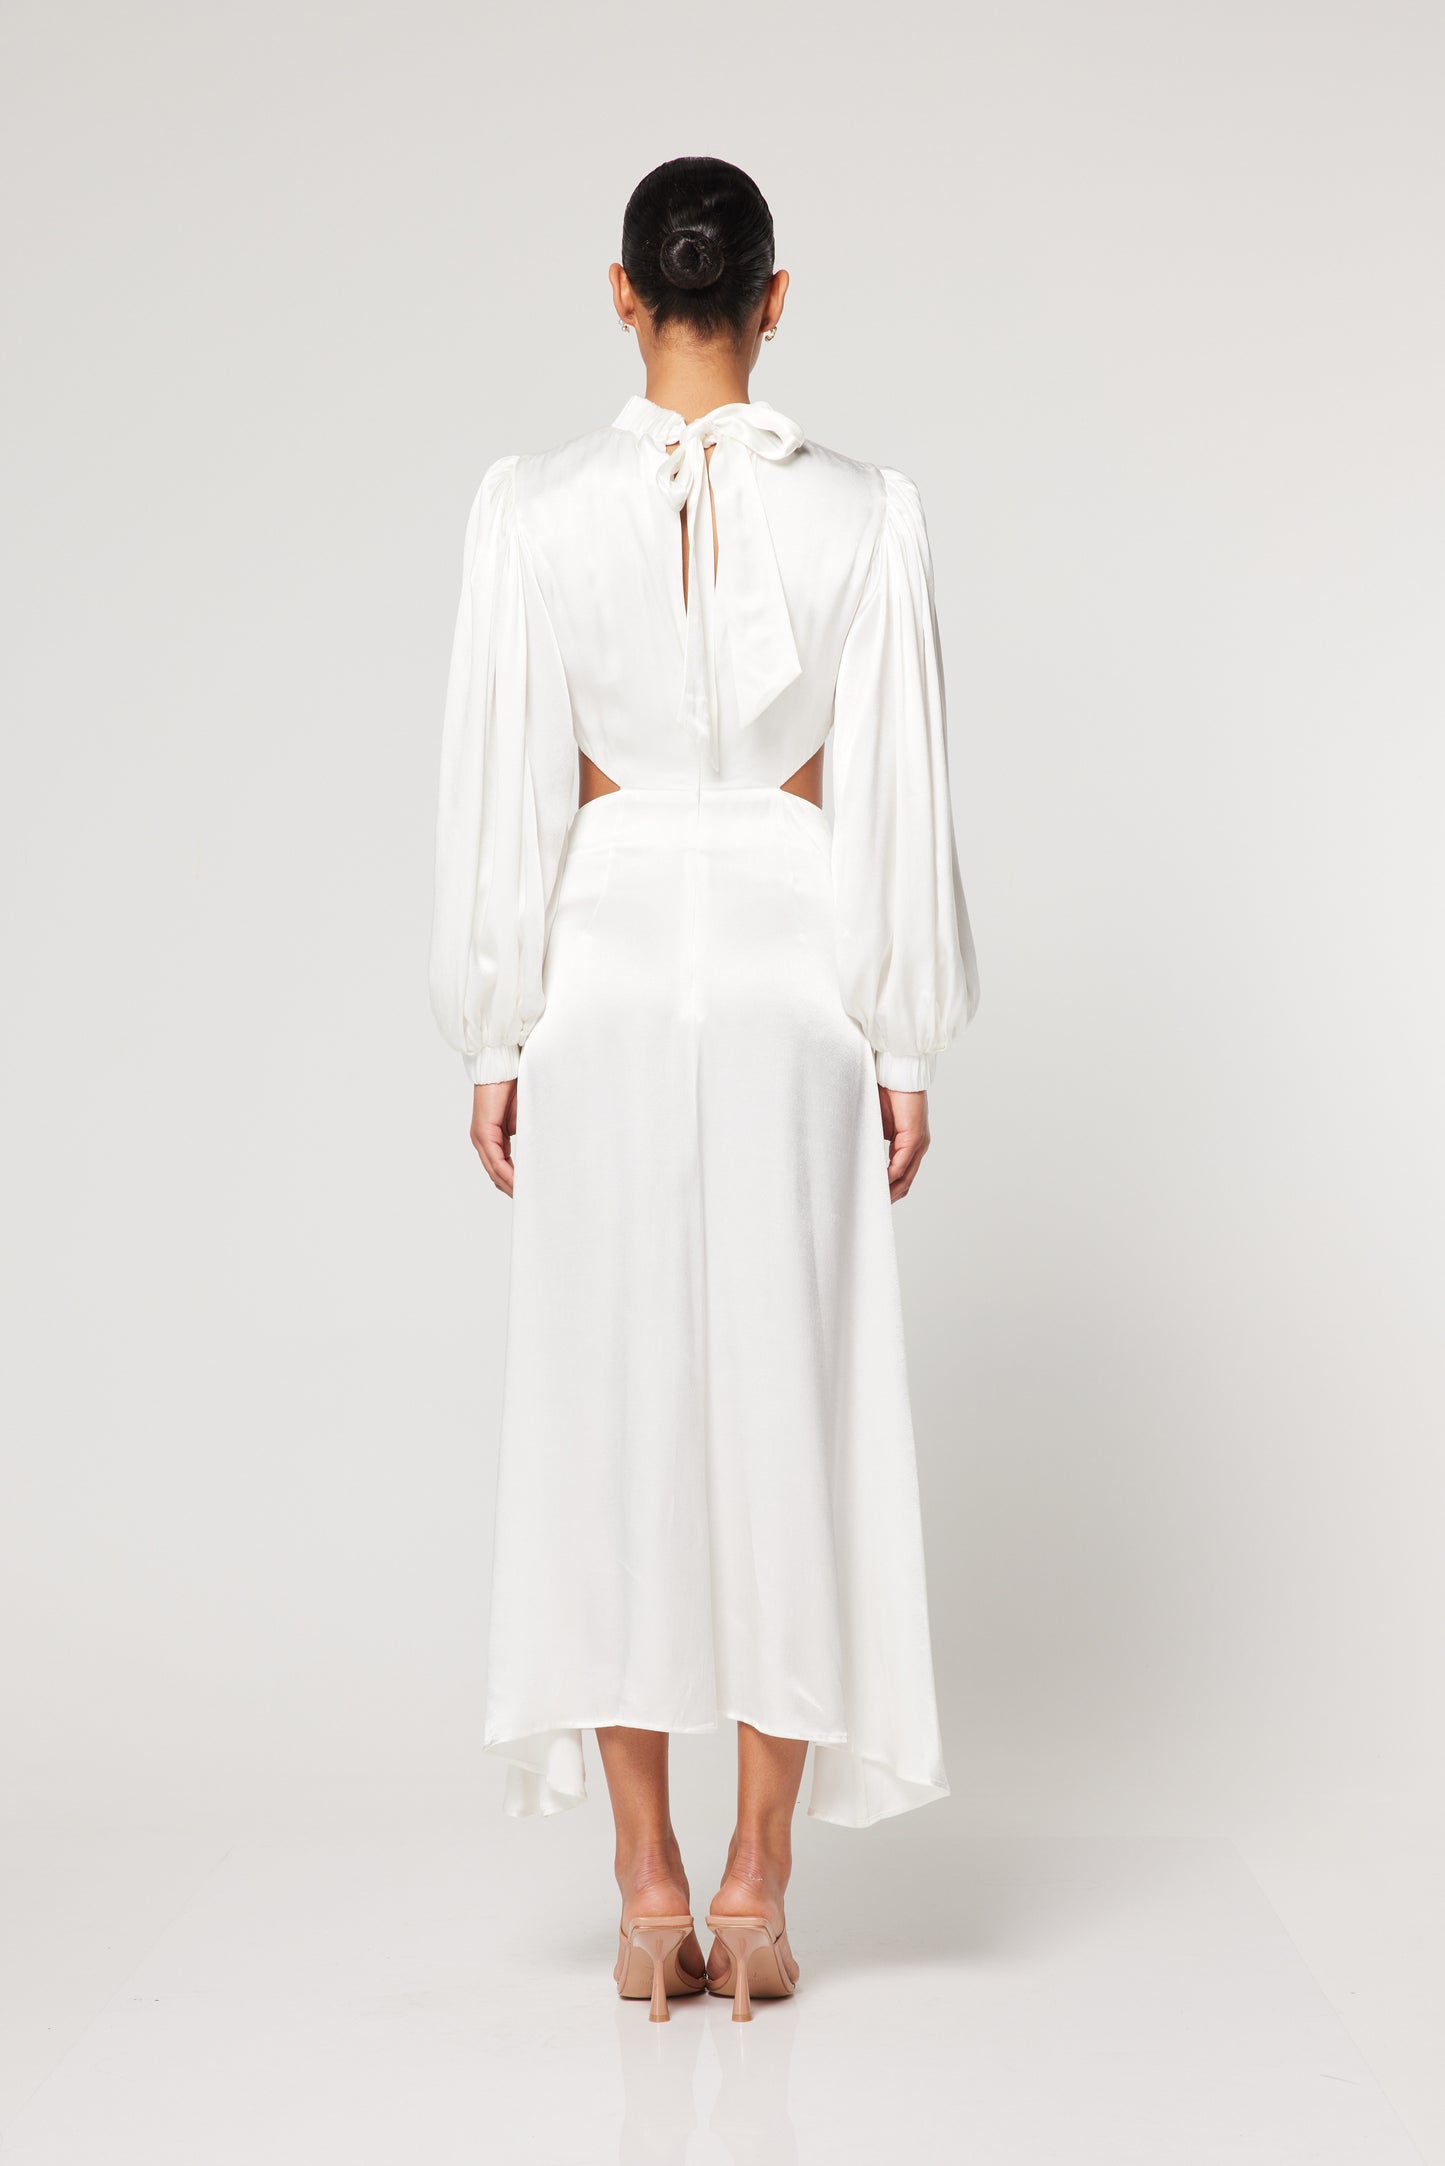 KIRRILY DRESS WHITE